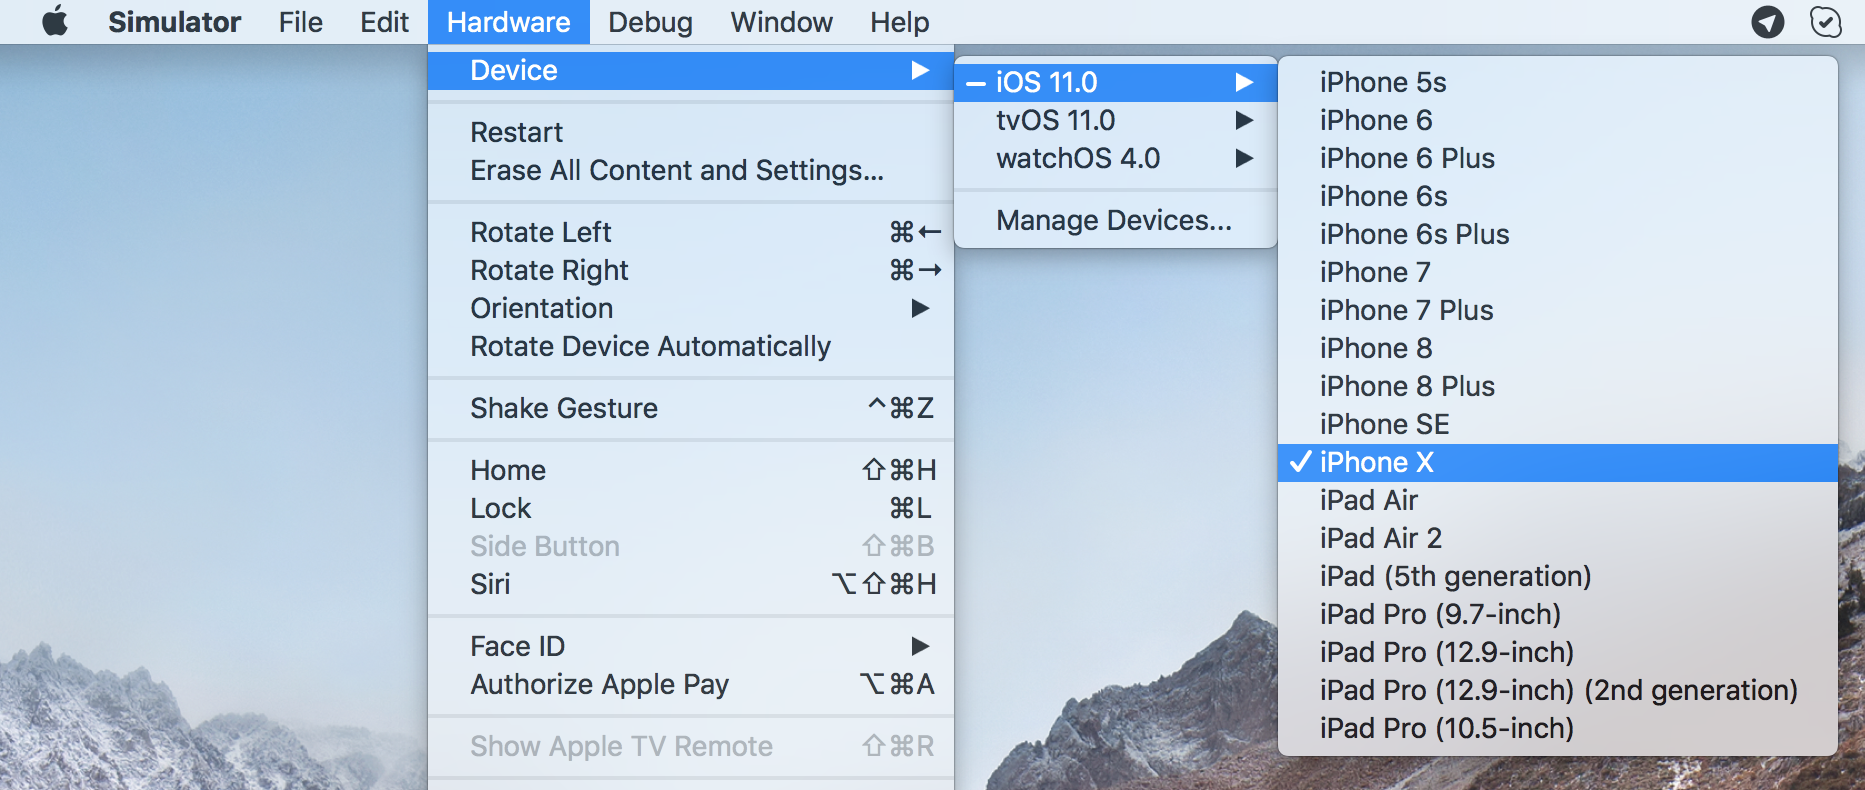 ios emulator file system on your mac